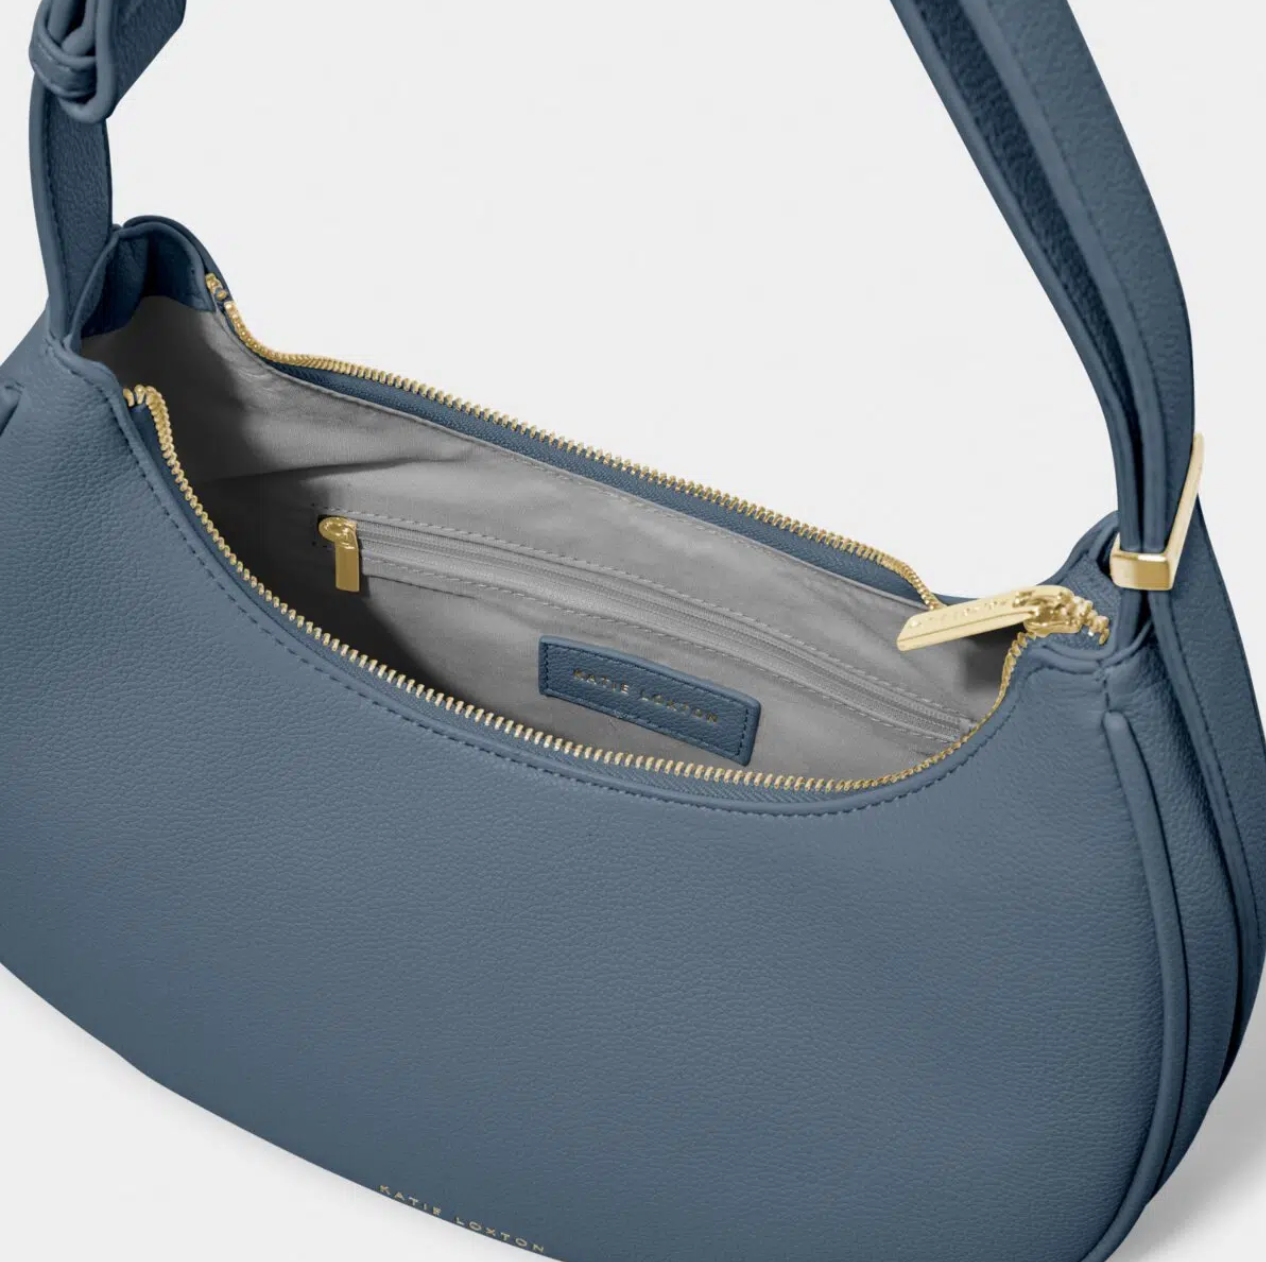 inside shot of navy scoop handbag showing grey lining and interior side pocket with gold zip